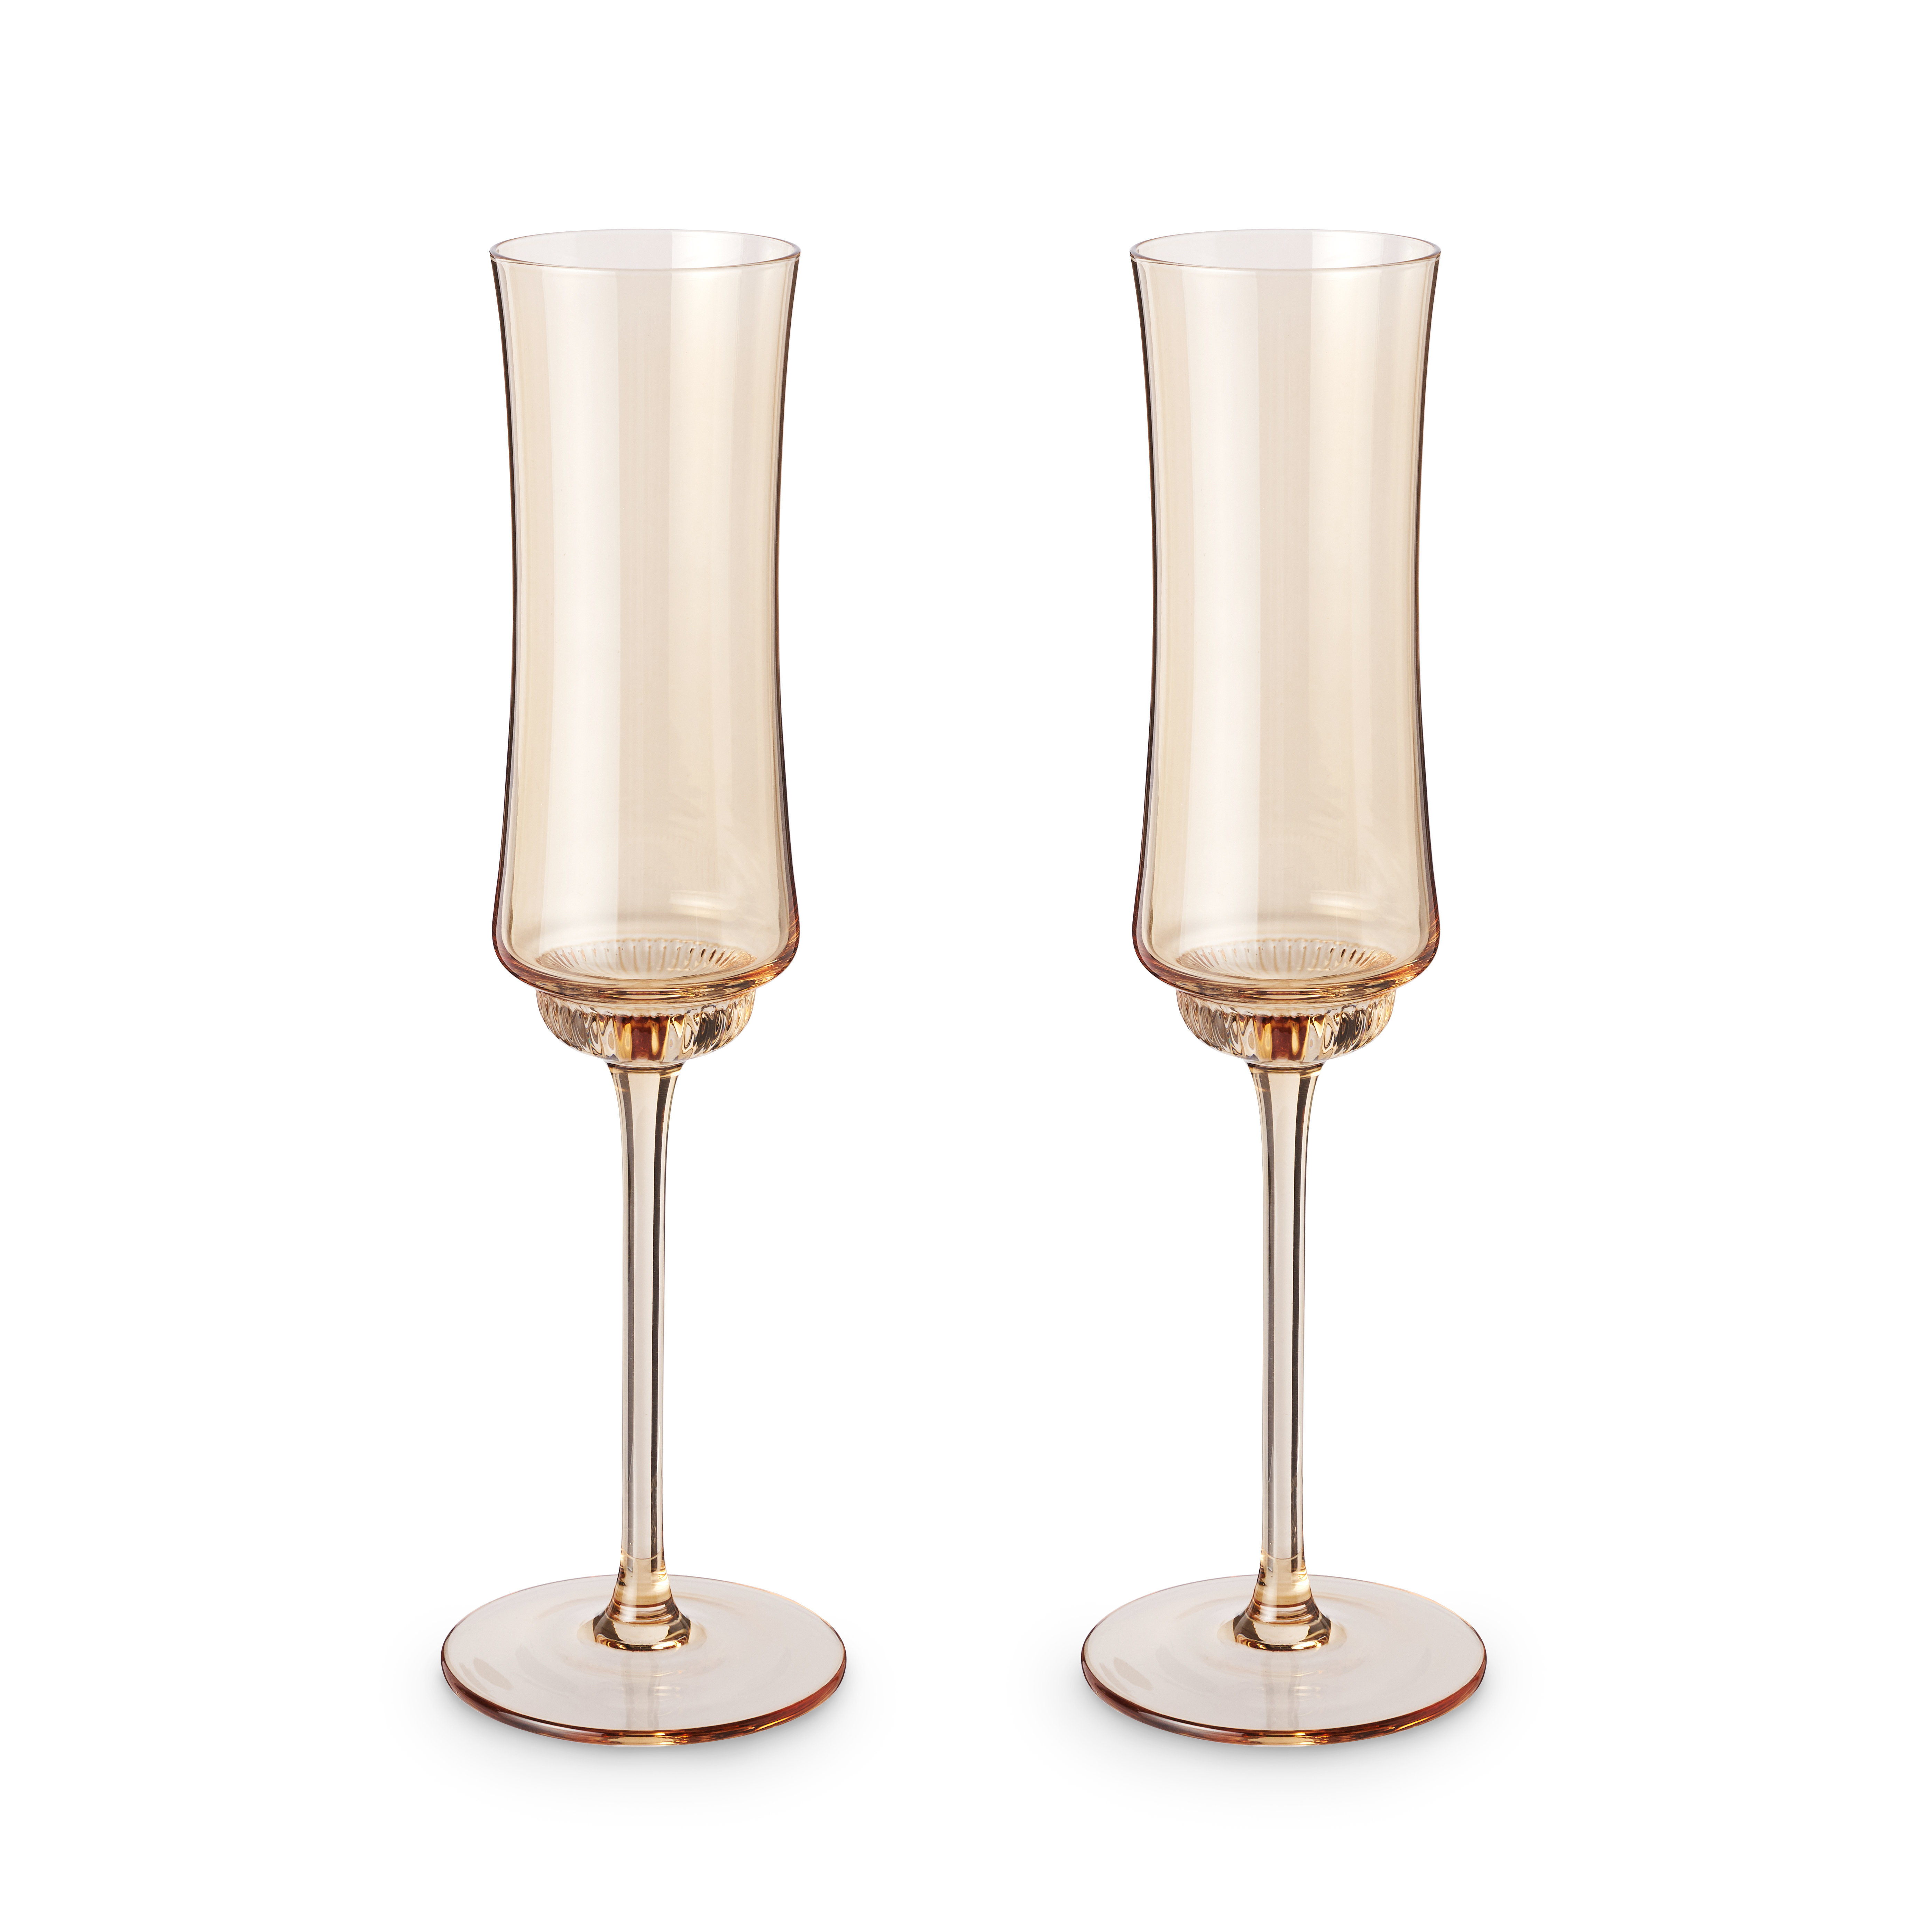 Twine Rose Crystal Stemless Wine Glass Set